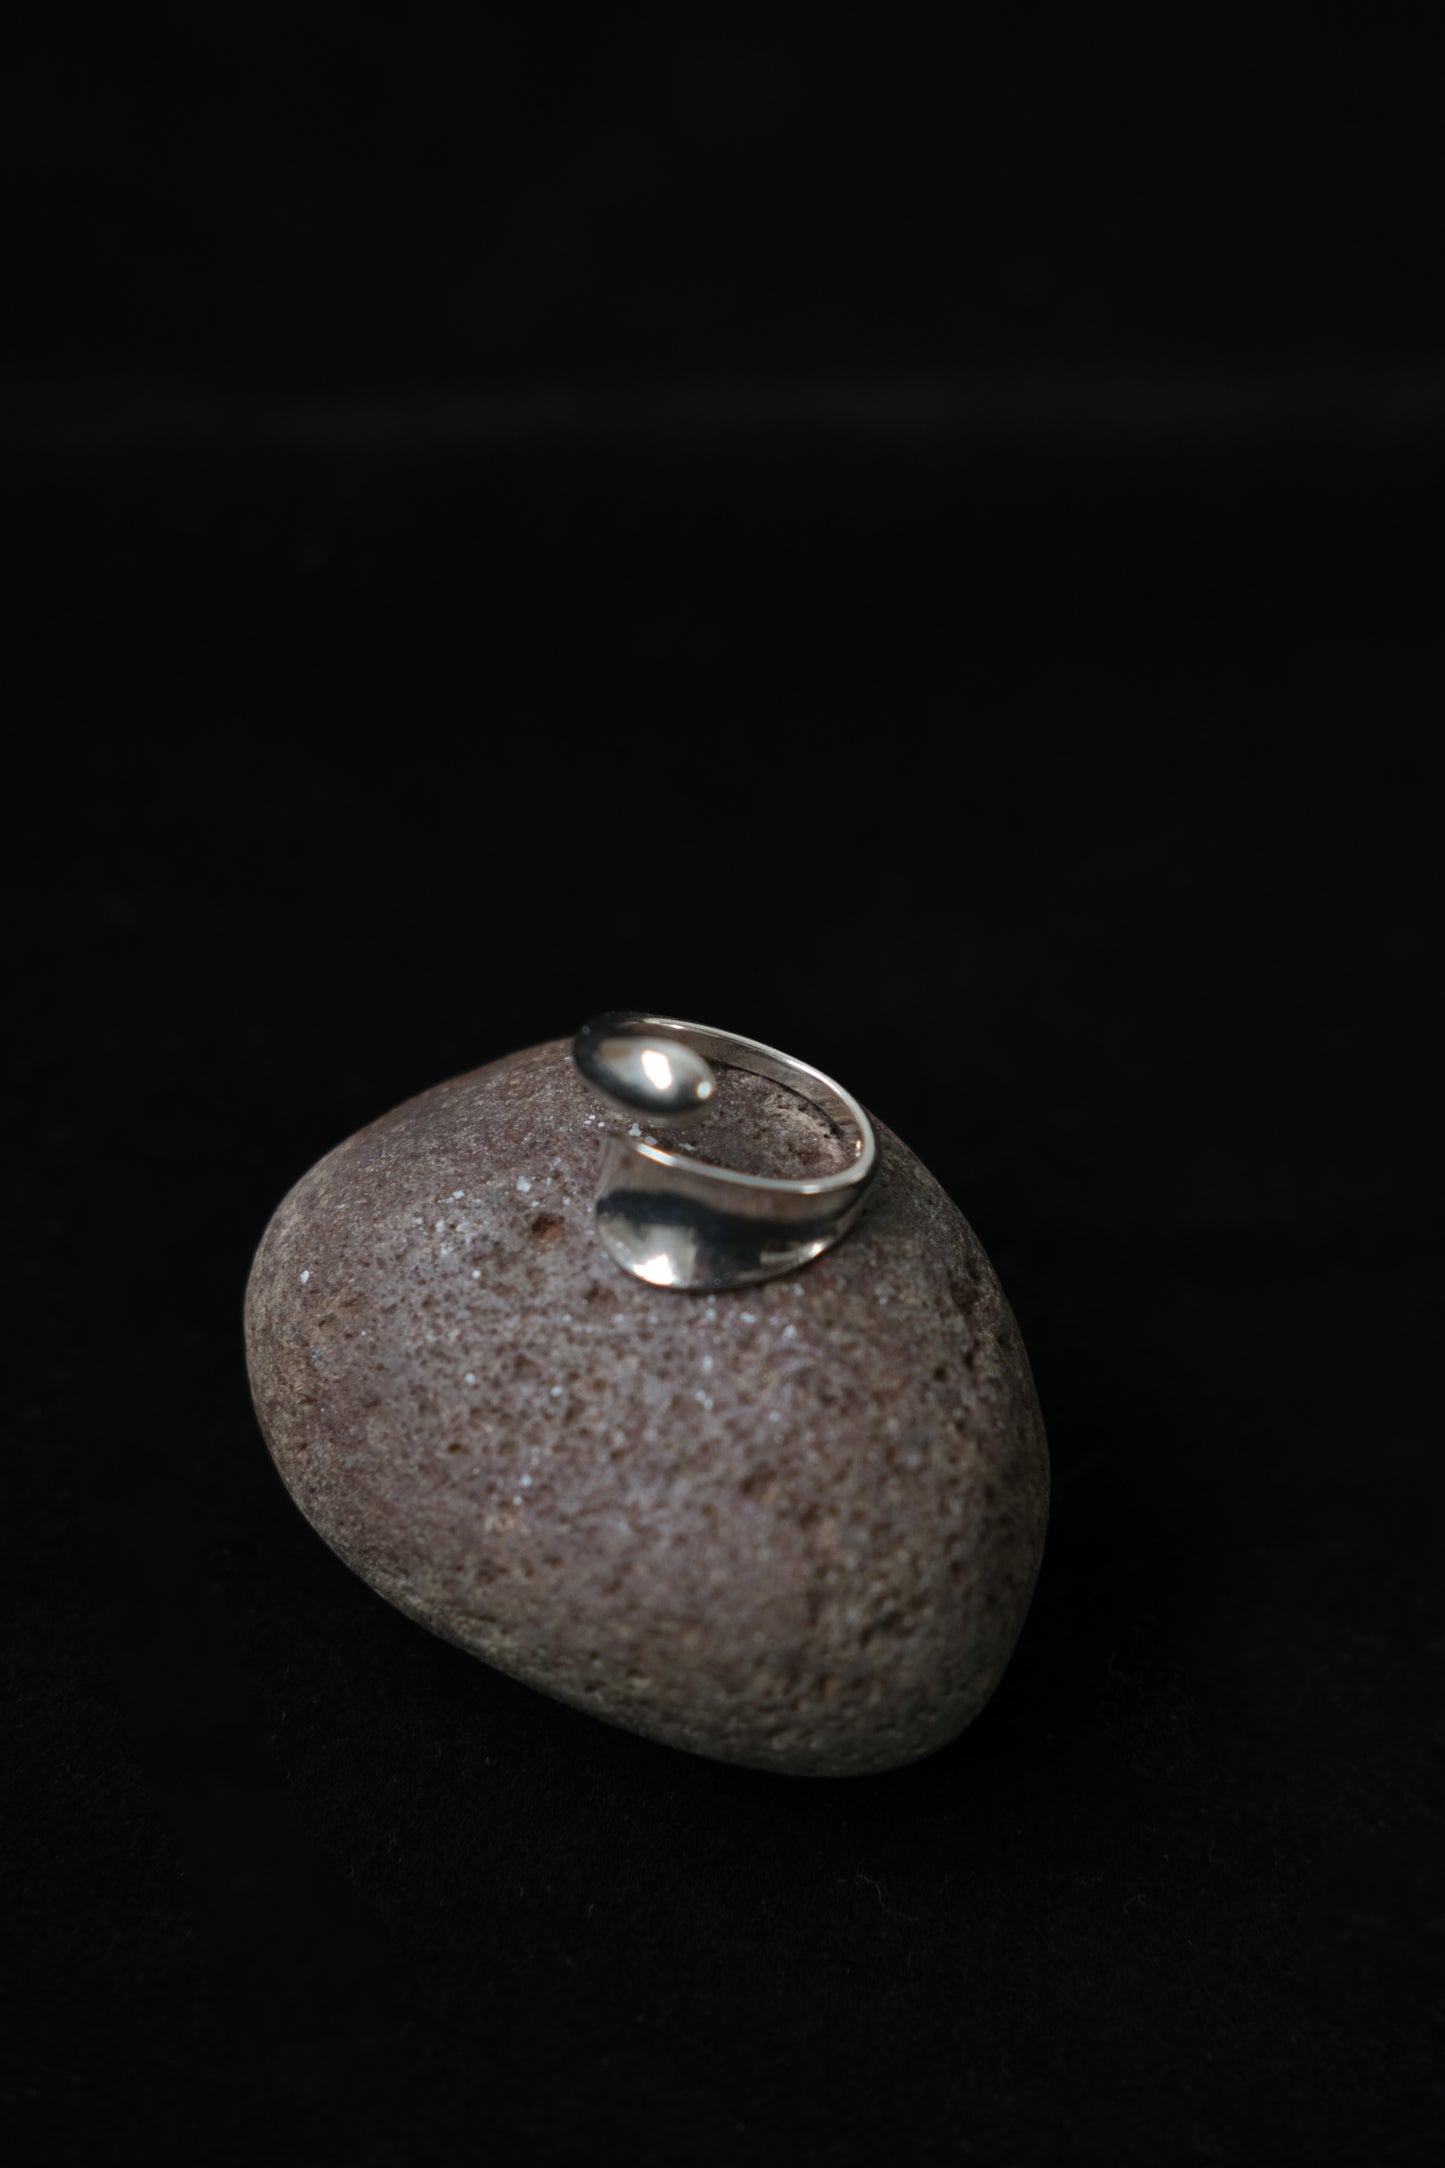 Glossy minimalist irregular ring